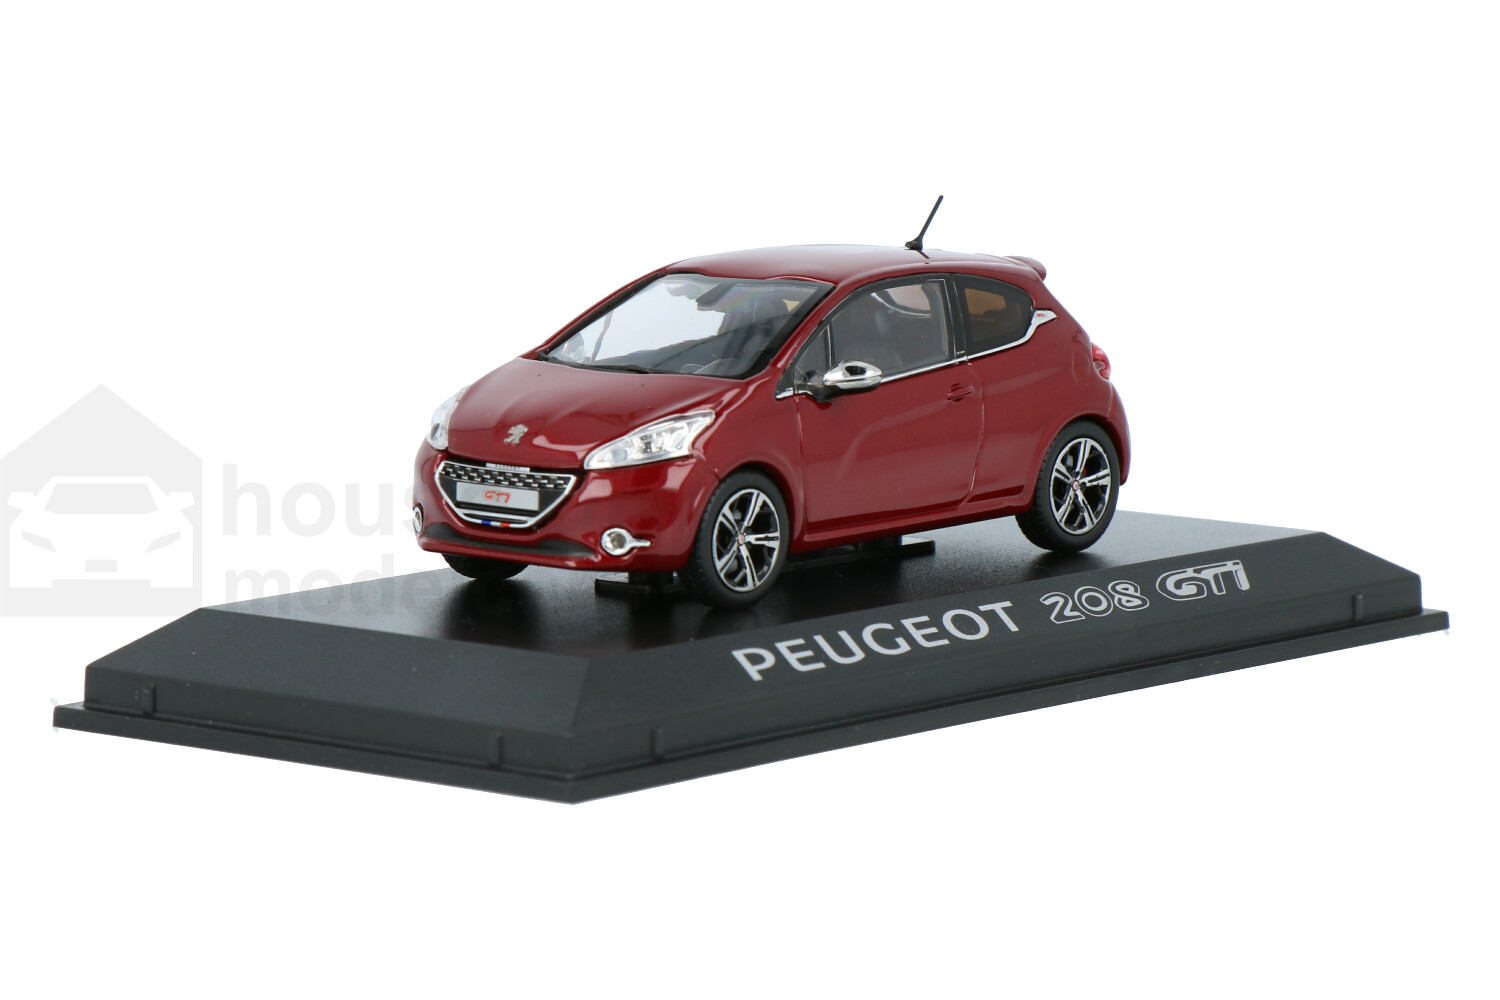 Peugeot-208-GTi-472803_13153551094728037-NorevPeugeot-208-GTi-472803_Houseofmodelcars_.jpg